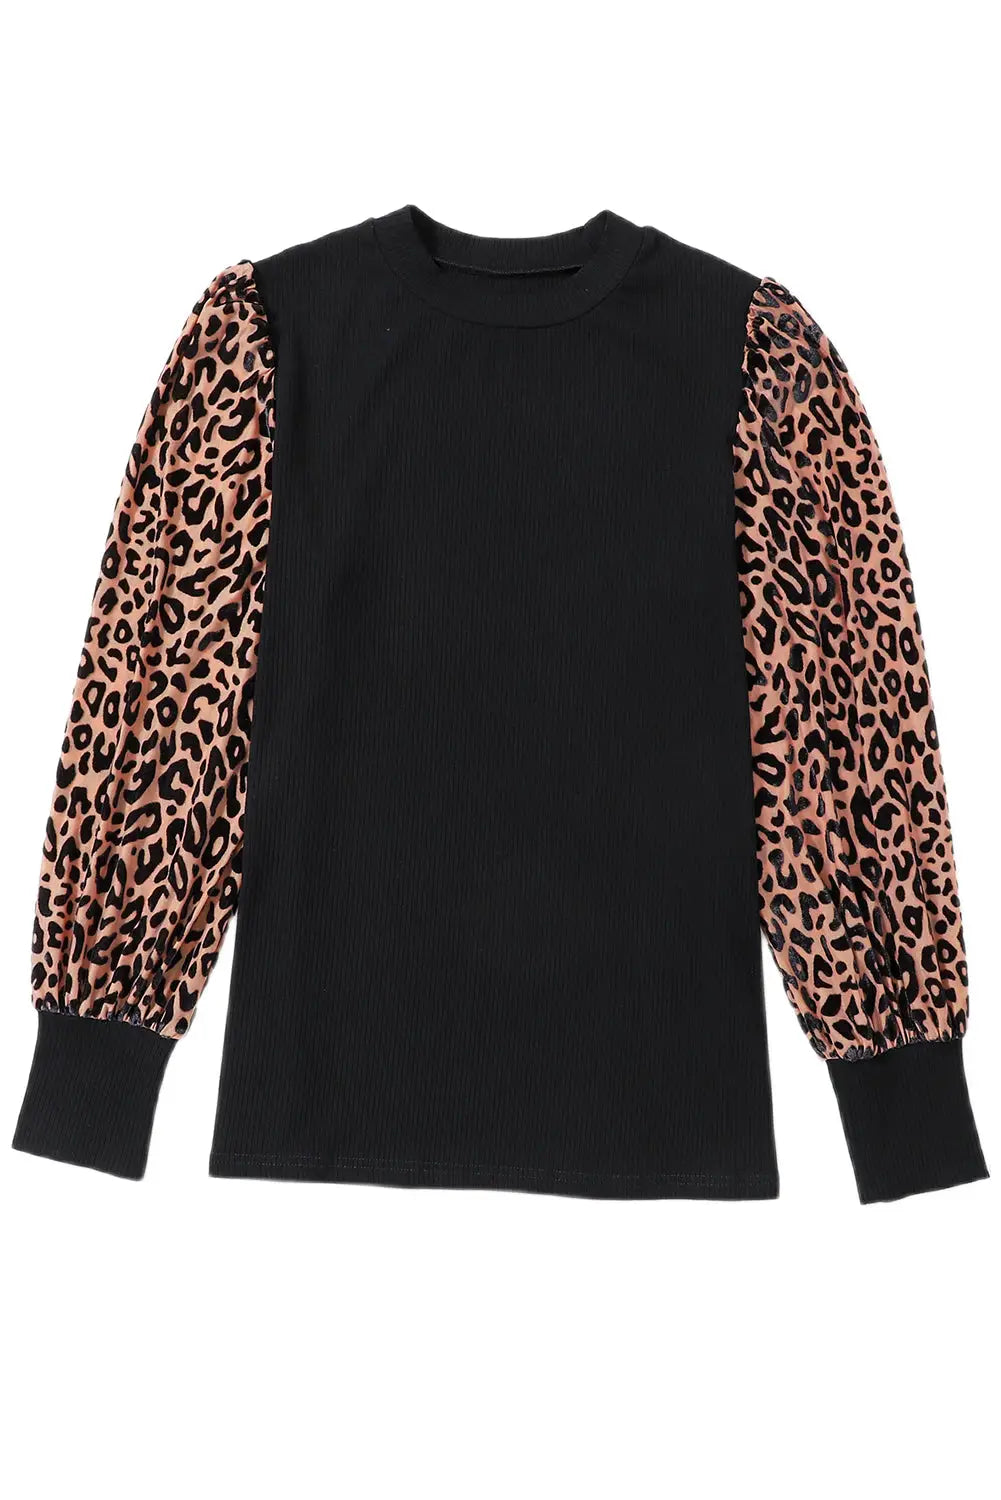 Black leopard patchwork ribbed knit mock neck plus size top